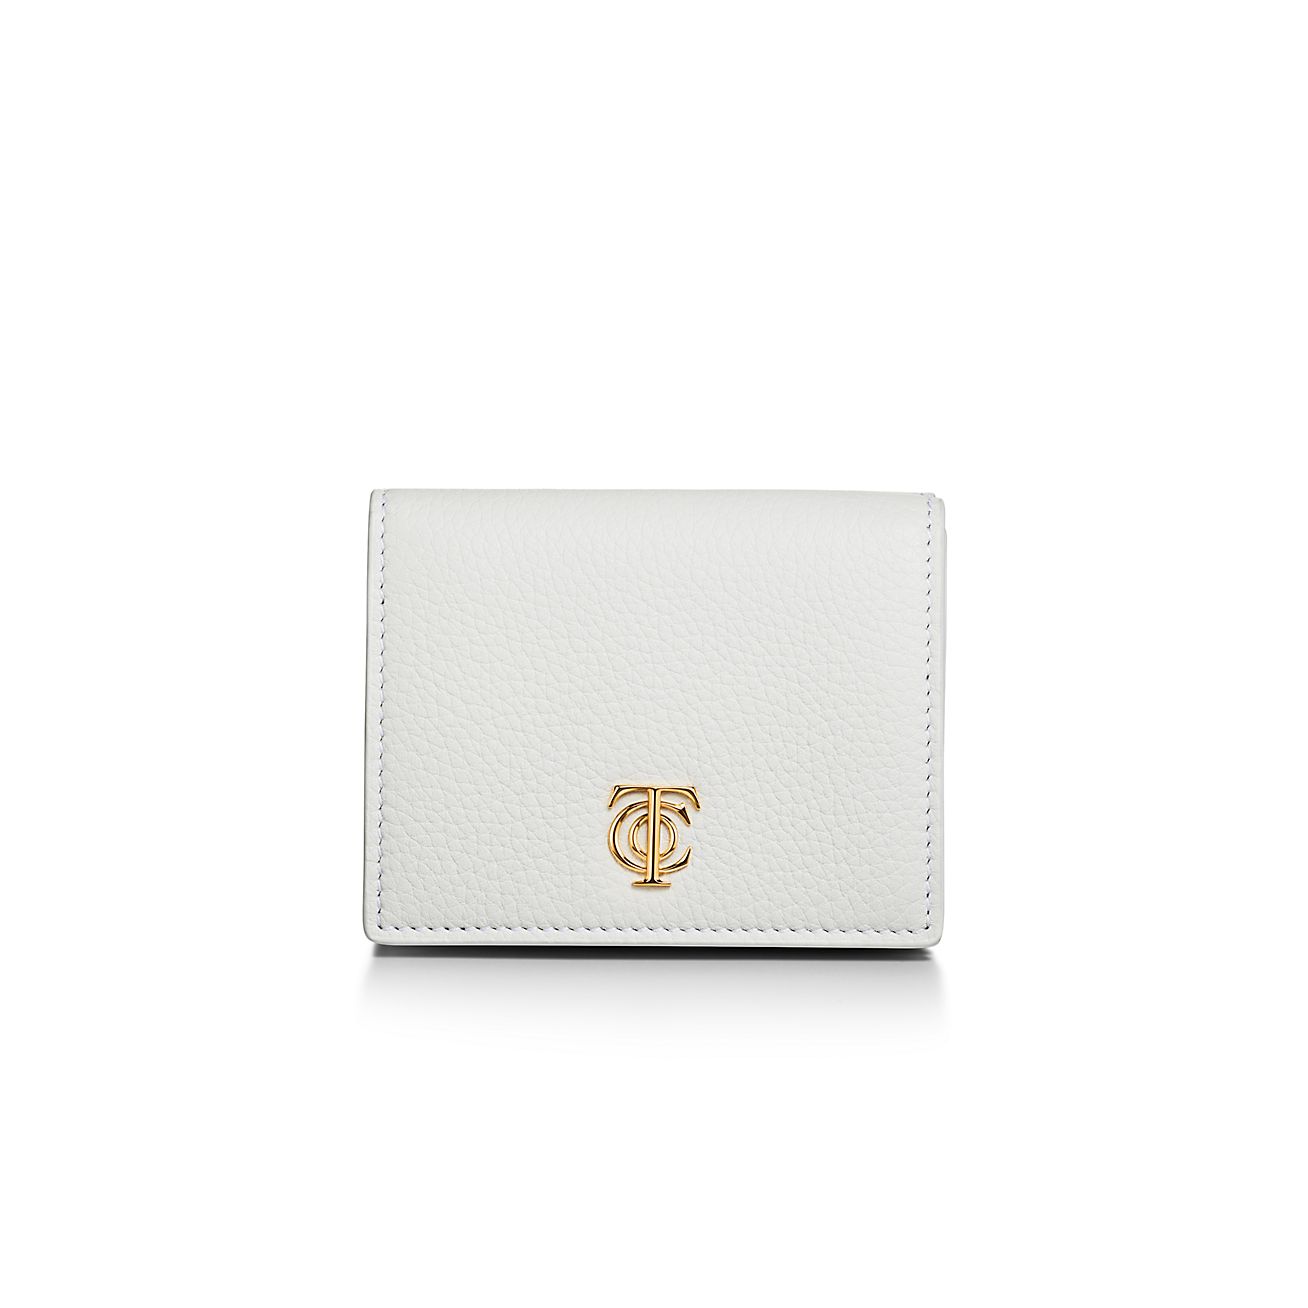 T&CO. 三つ折り ウォレット ホワイト レザー | Tiffany & Co.